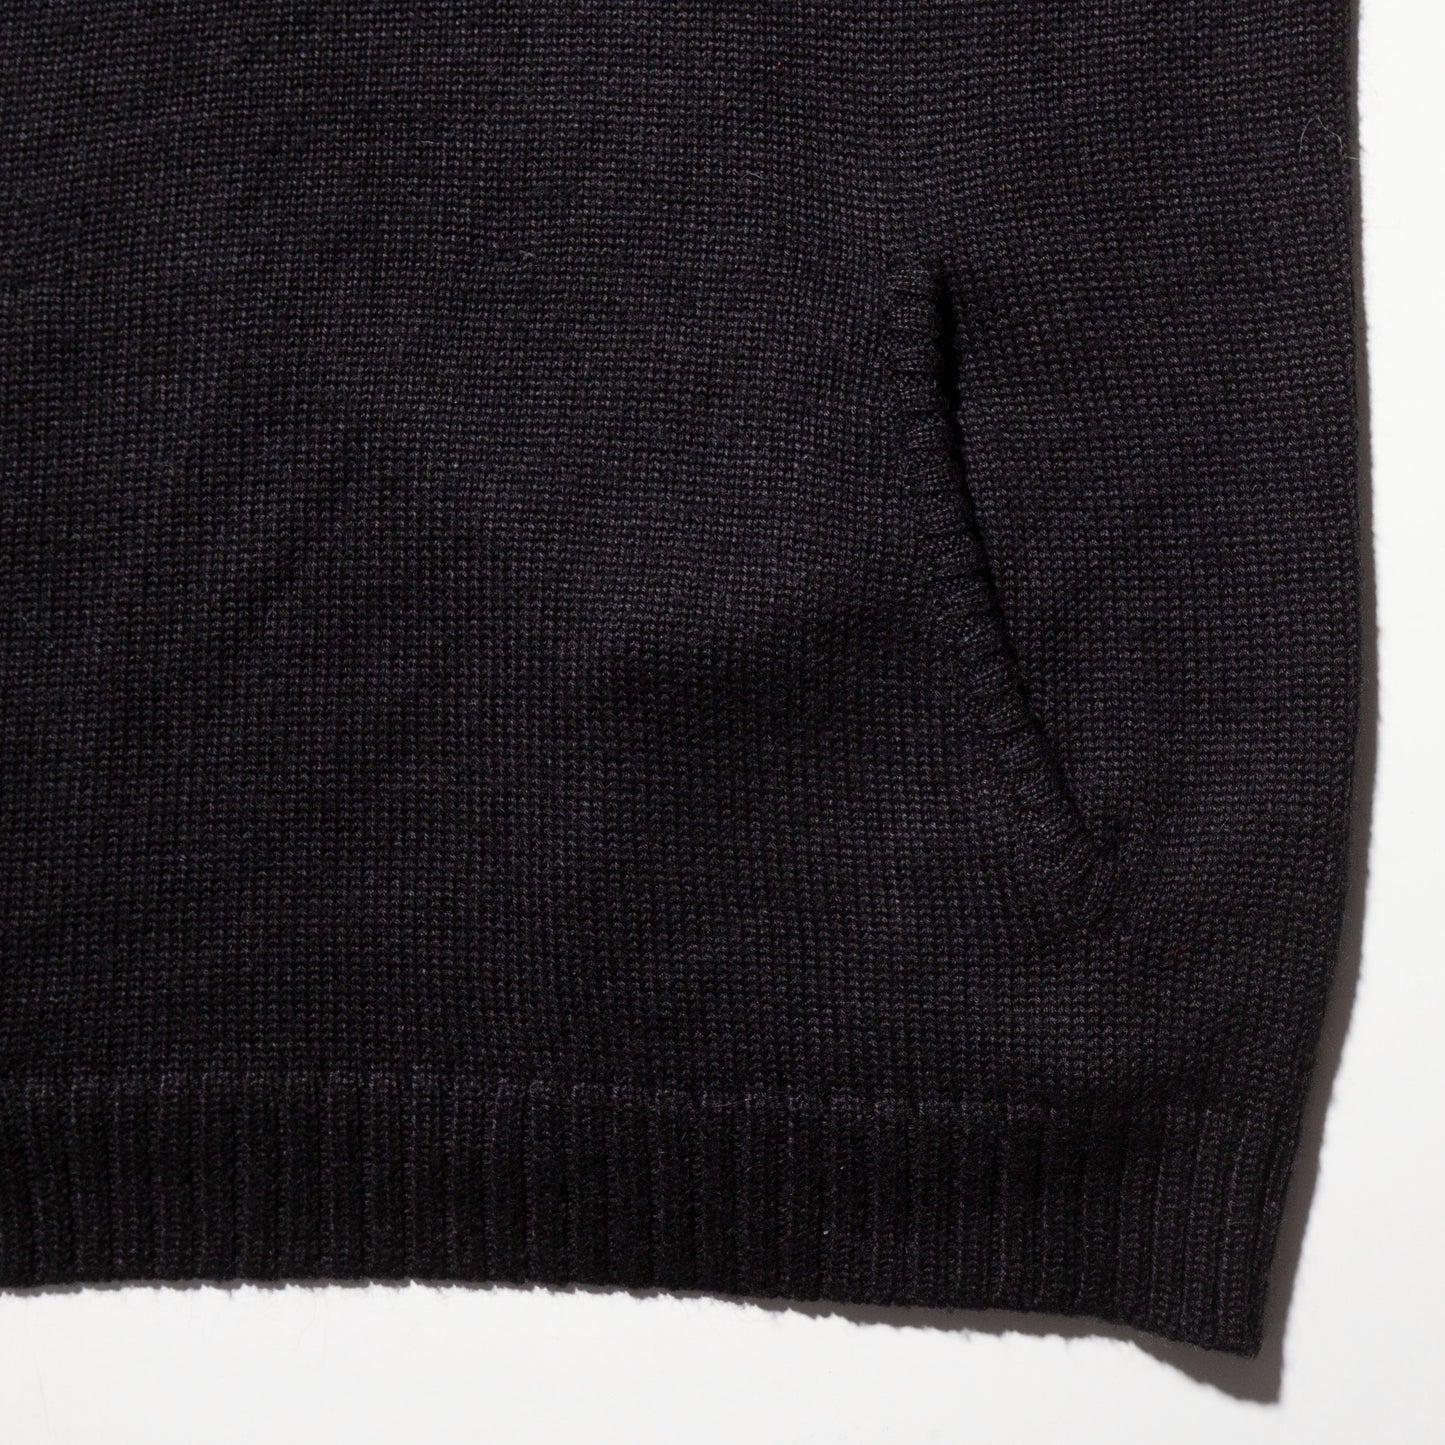 vintage knit smok hoodie